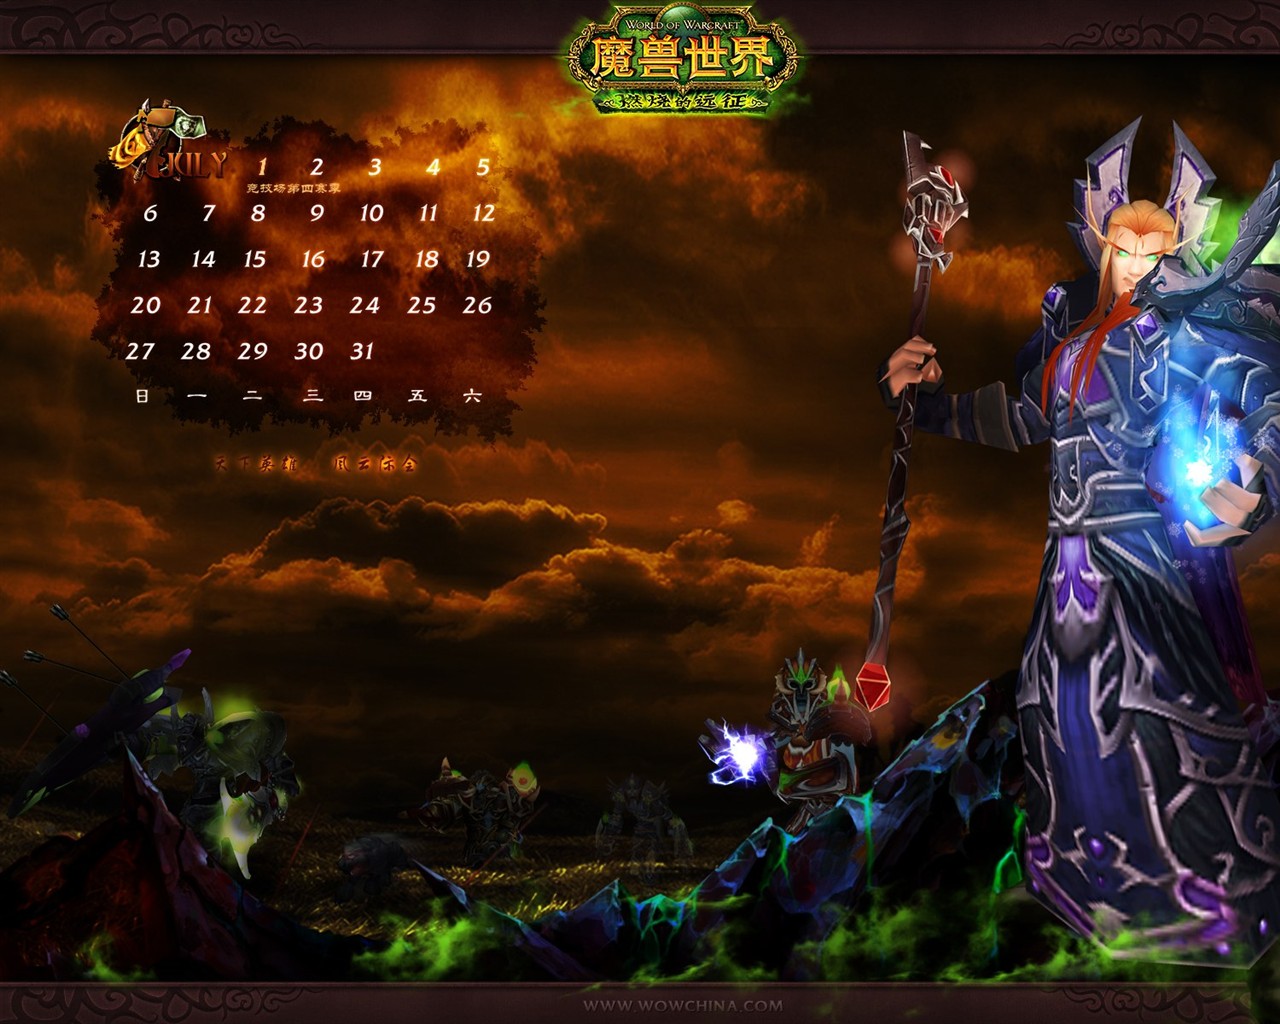 World of Warcraft: fondo de pantalla oficial de The Burning Crusade (2) #26 - 1280x1024